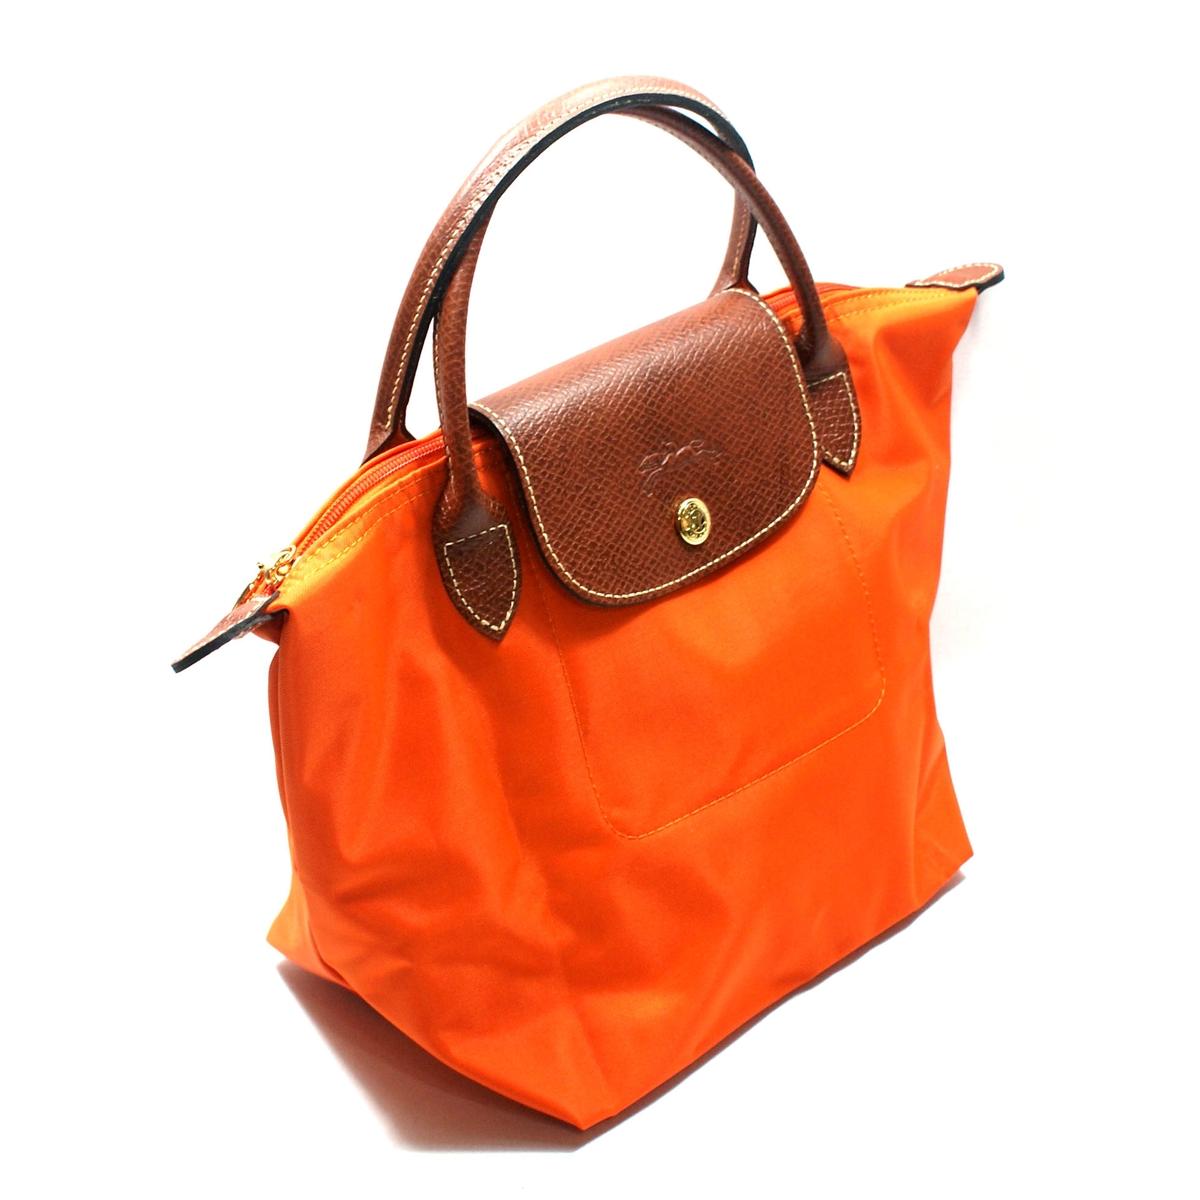 Longchamp Le Place Mini Duffle Tote Bag Orange #1621089217 | Longchamp 1621089217